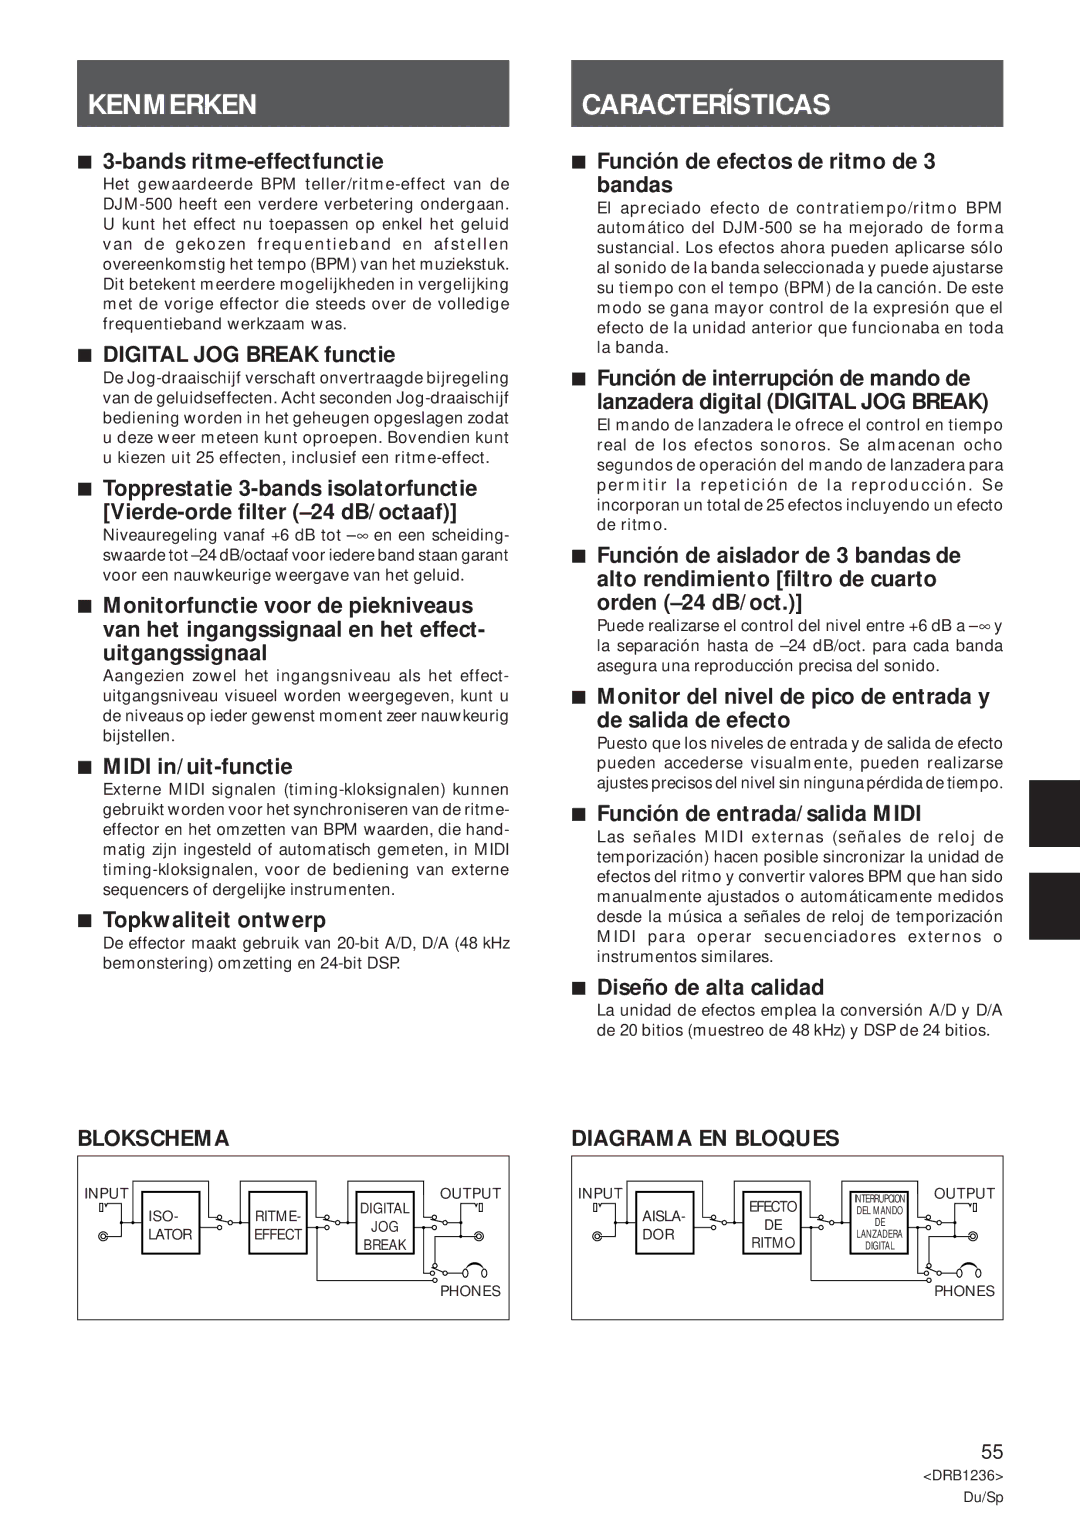 Pioneer Efx-500 operating instructions Kenmerken, Características, Blokschema, Diagrama EN Bloques 